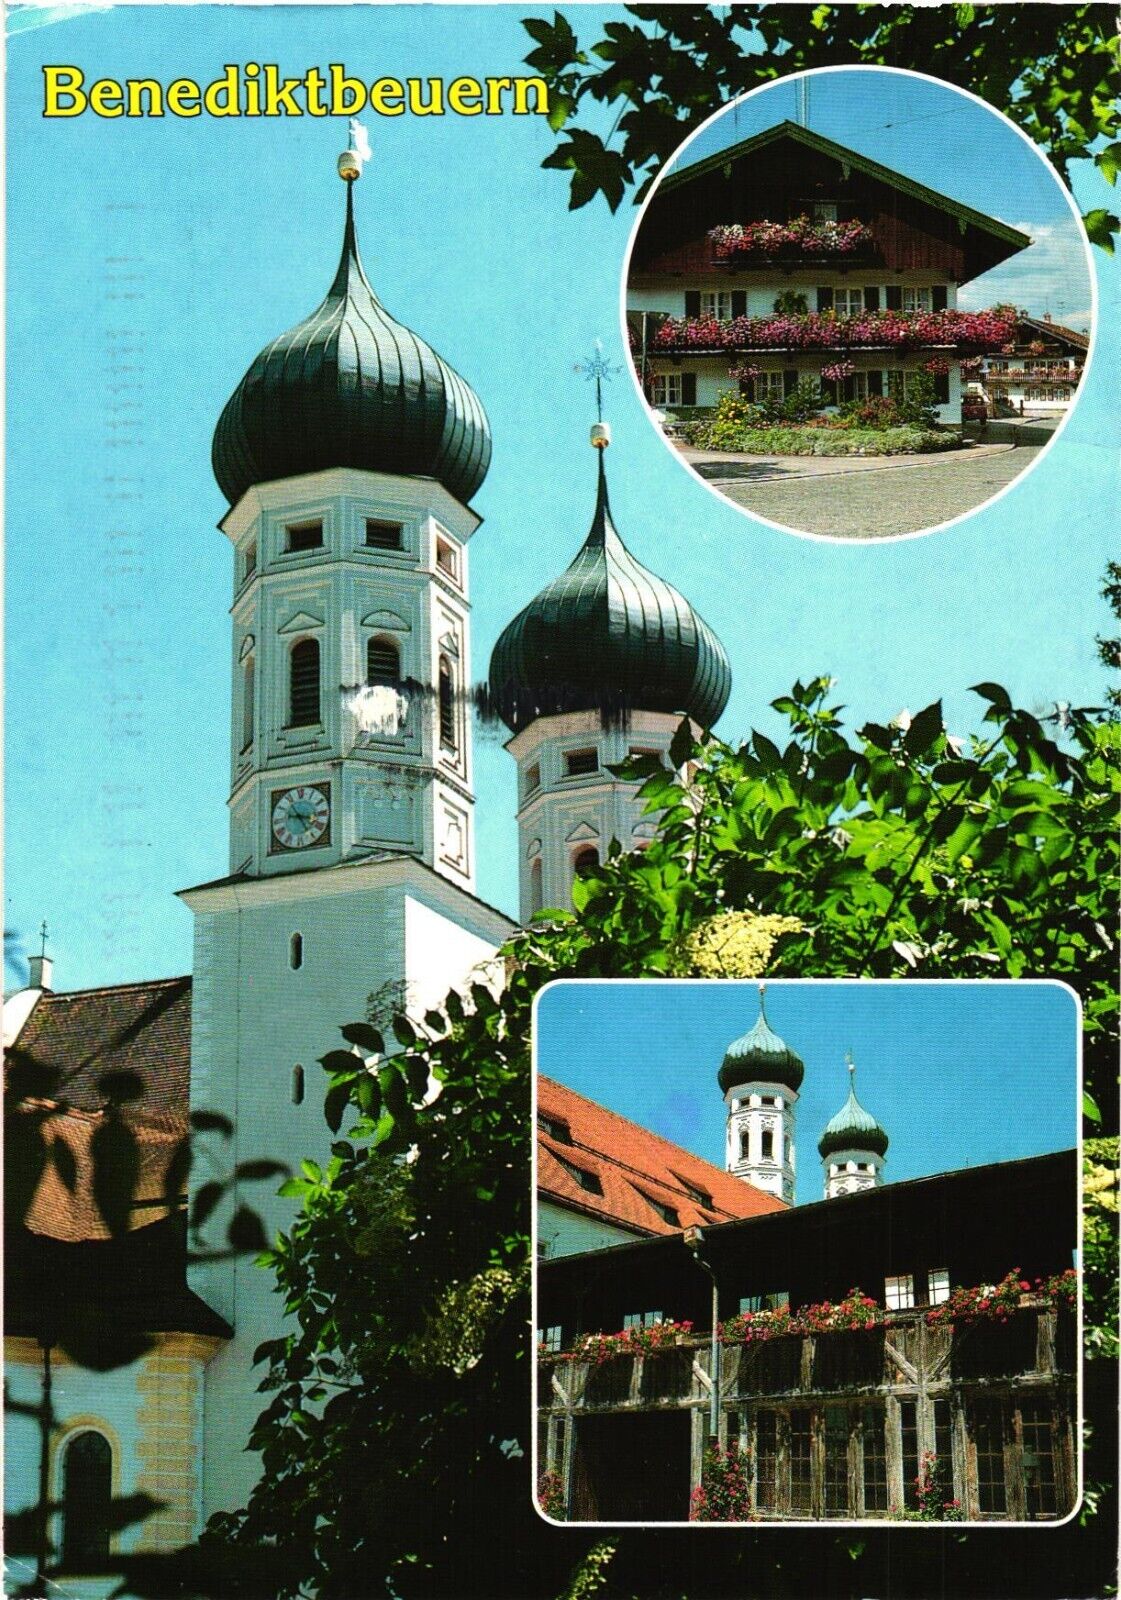 Views of Benediktbeuern Monastery, Benediktbeuern, Germany Postcard